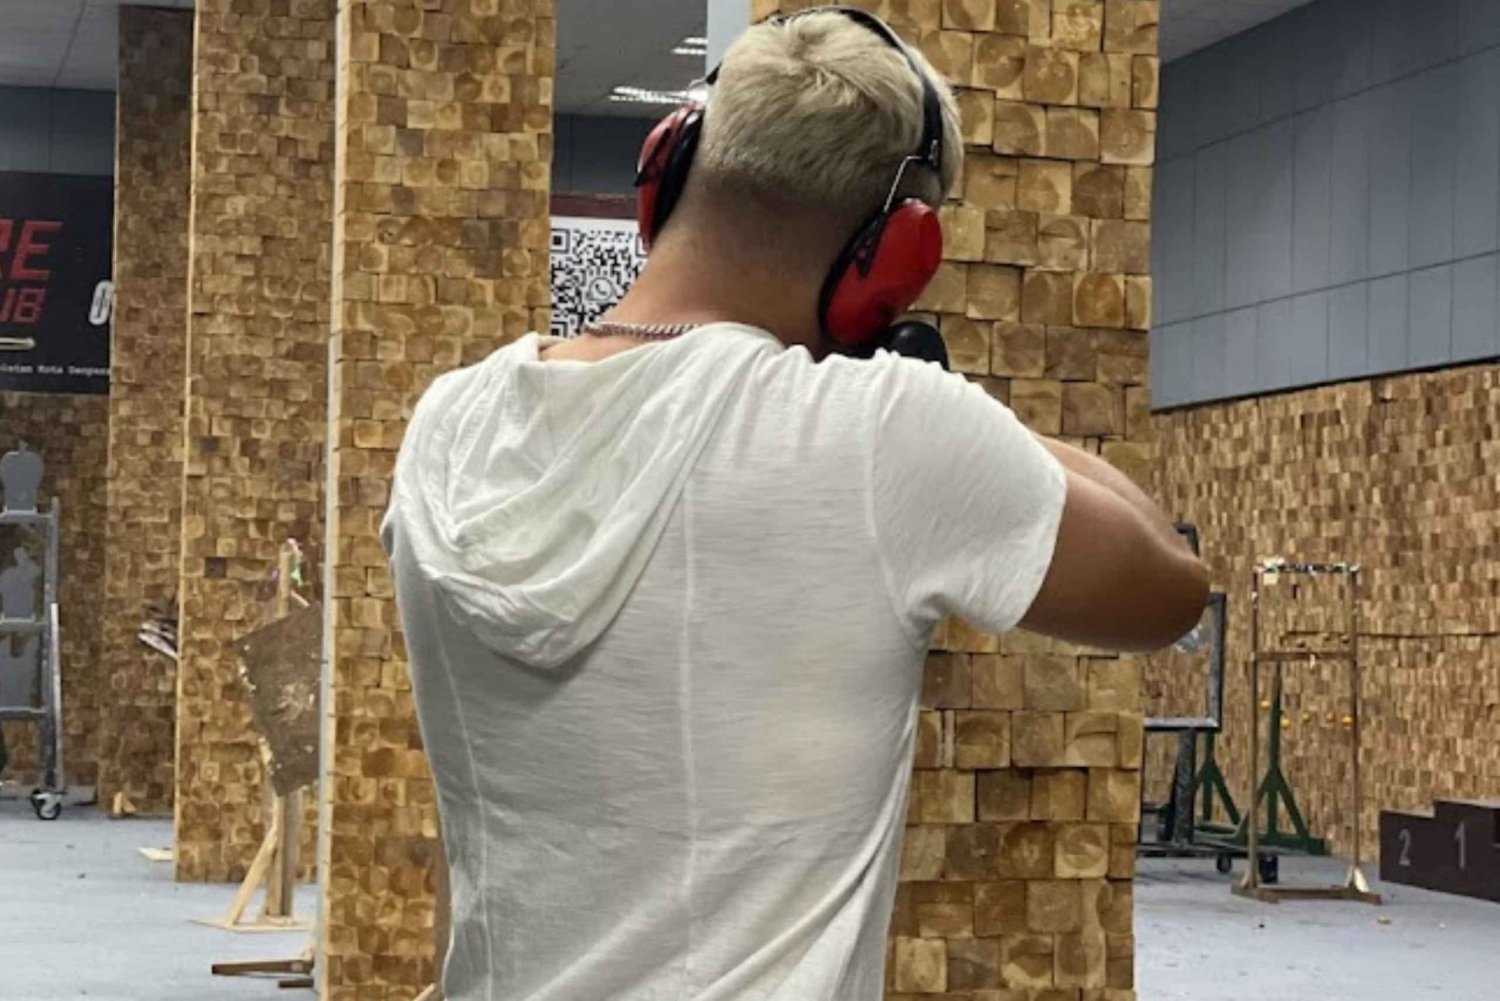 Bali: Single Gun Indoor Shooting Experiences with Pickup